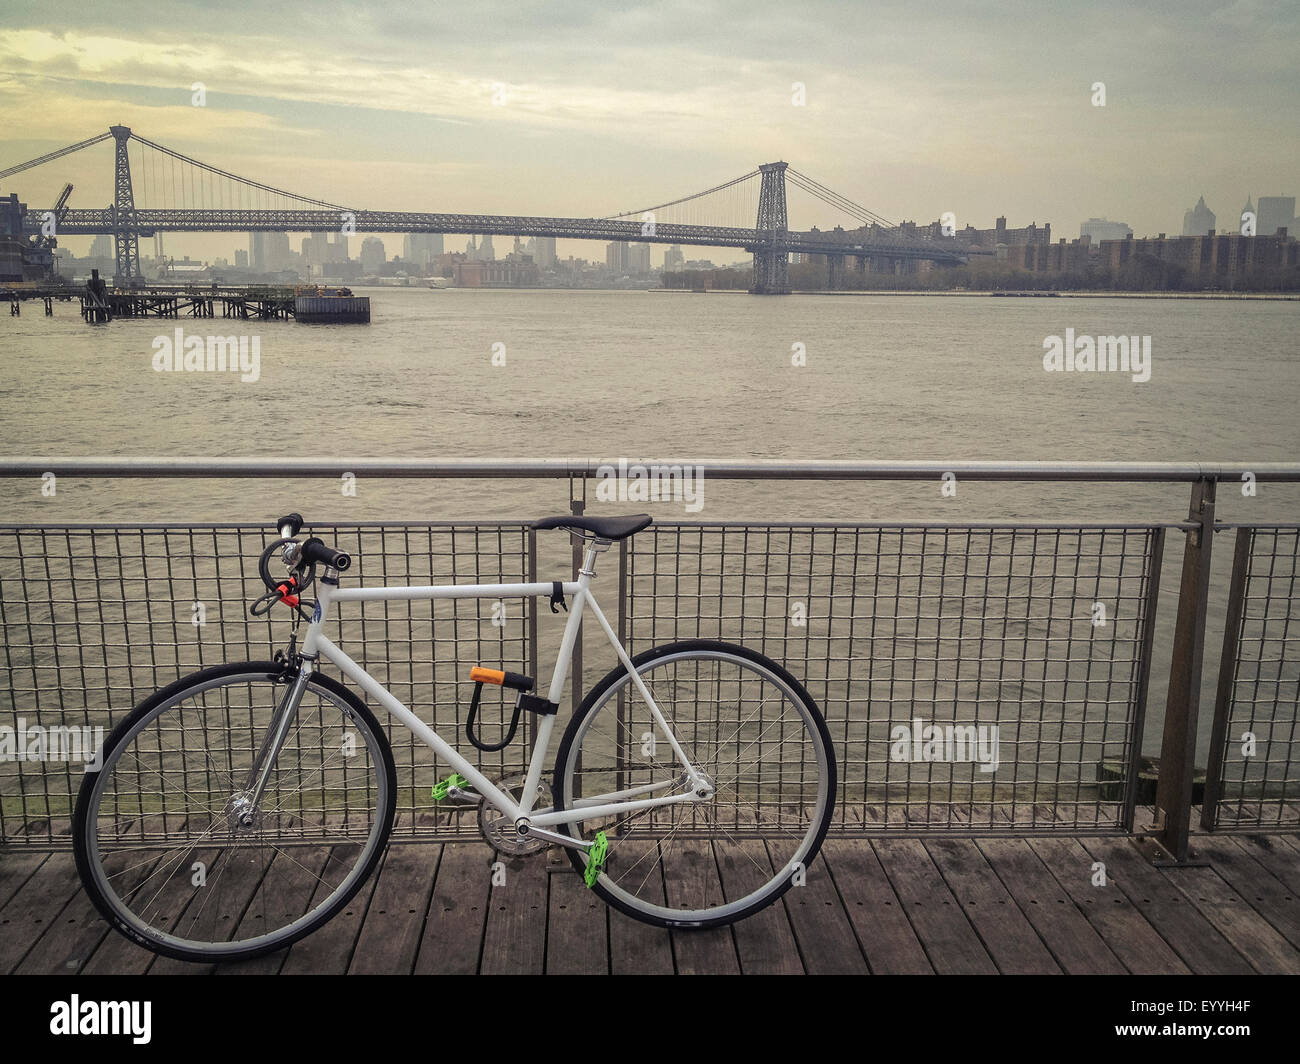 Bicycle locked to waterfront railing overlooking urban bridge, New York, New York, United States Stock Photo